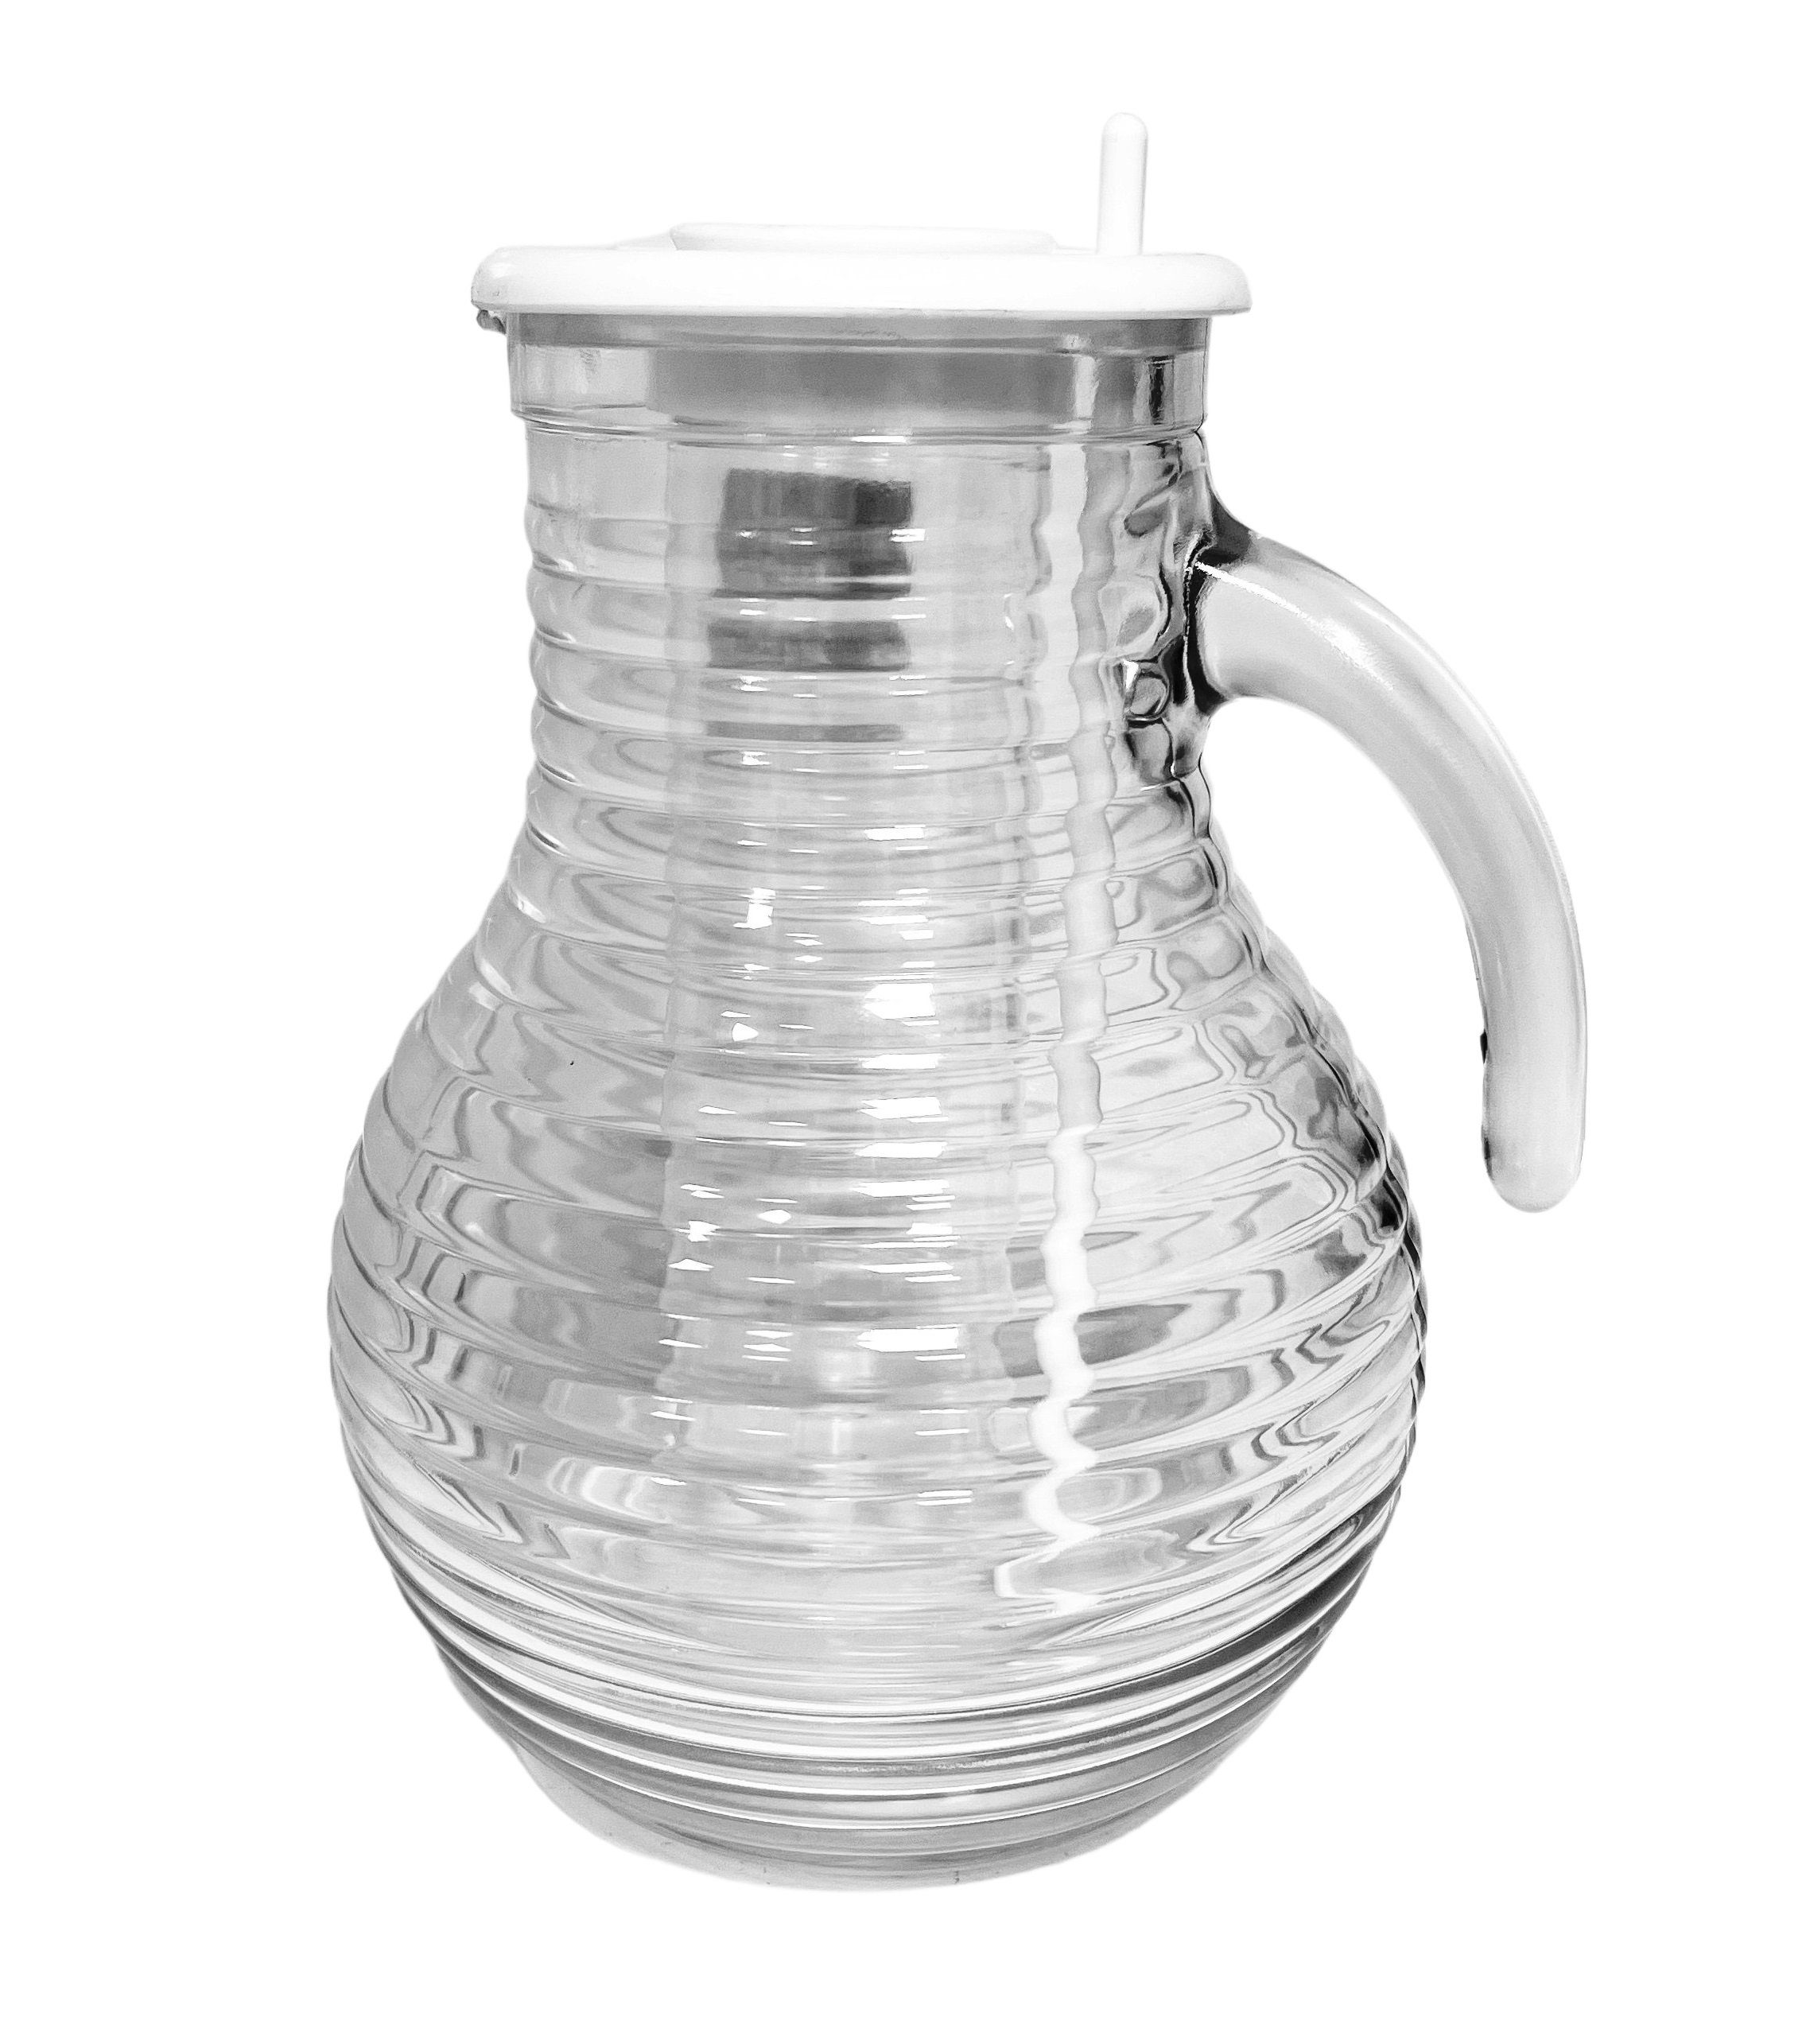 Emilja Wasserkrug Viva Glaskrug 2,2L mit Deckel Eisbehälter und Rührlöffel | Krüge